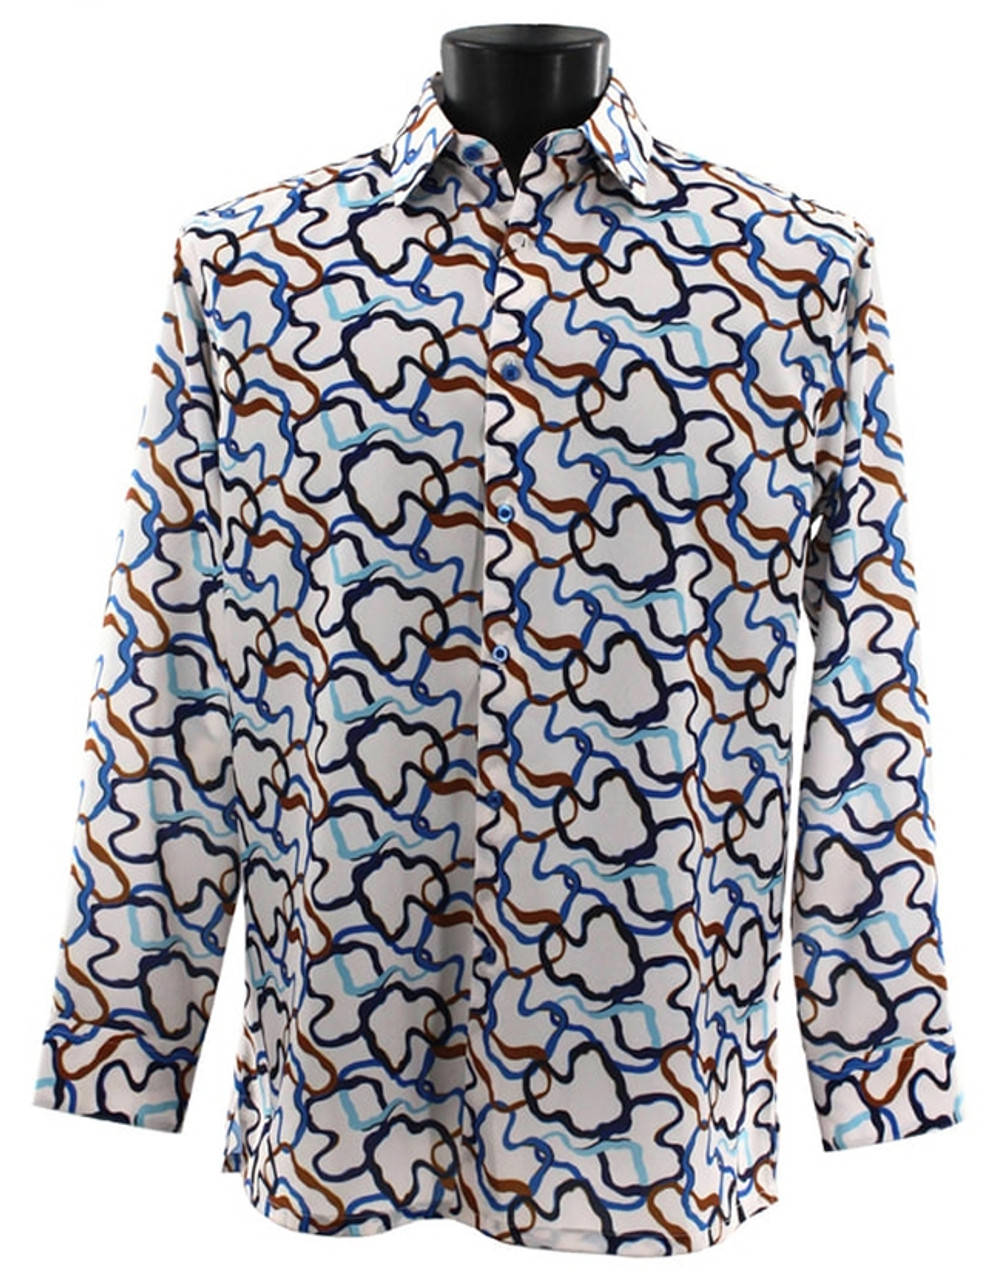 Bassiri Long Sleeve Camp Shirt - Multi-Color Blue Squiggle Design